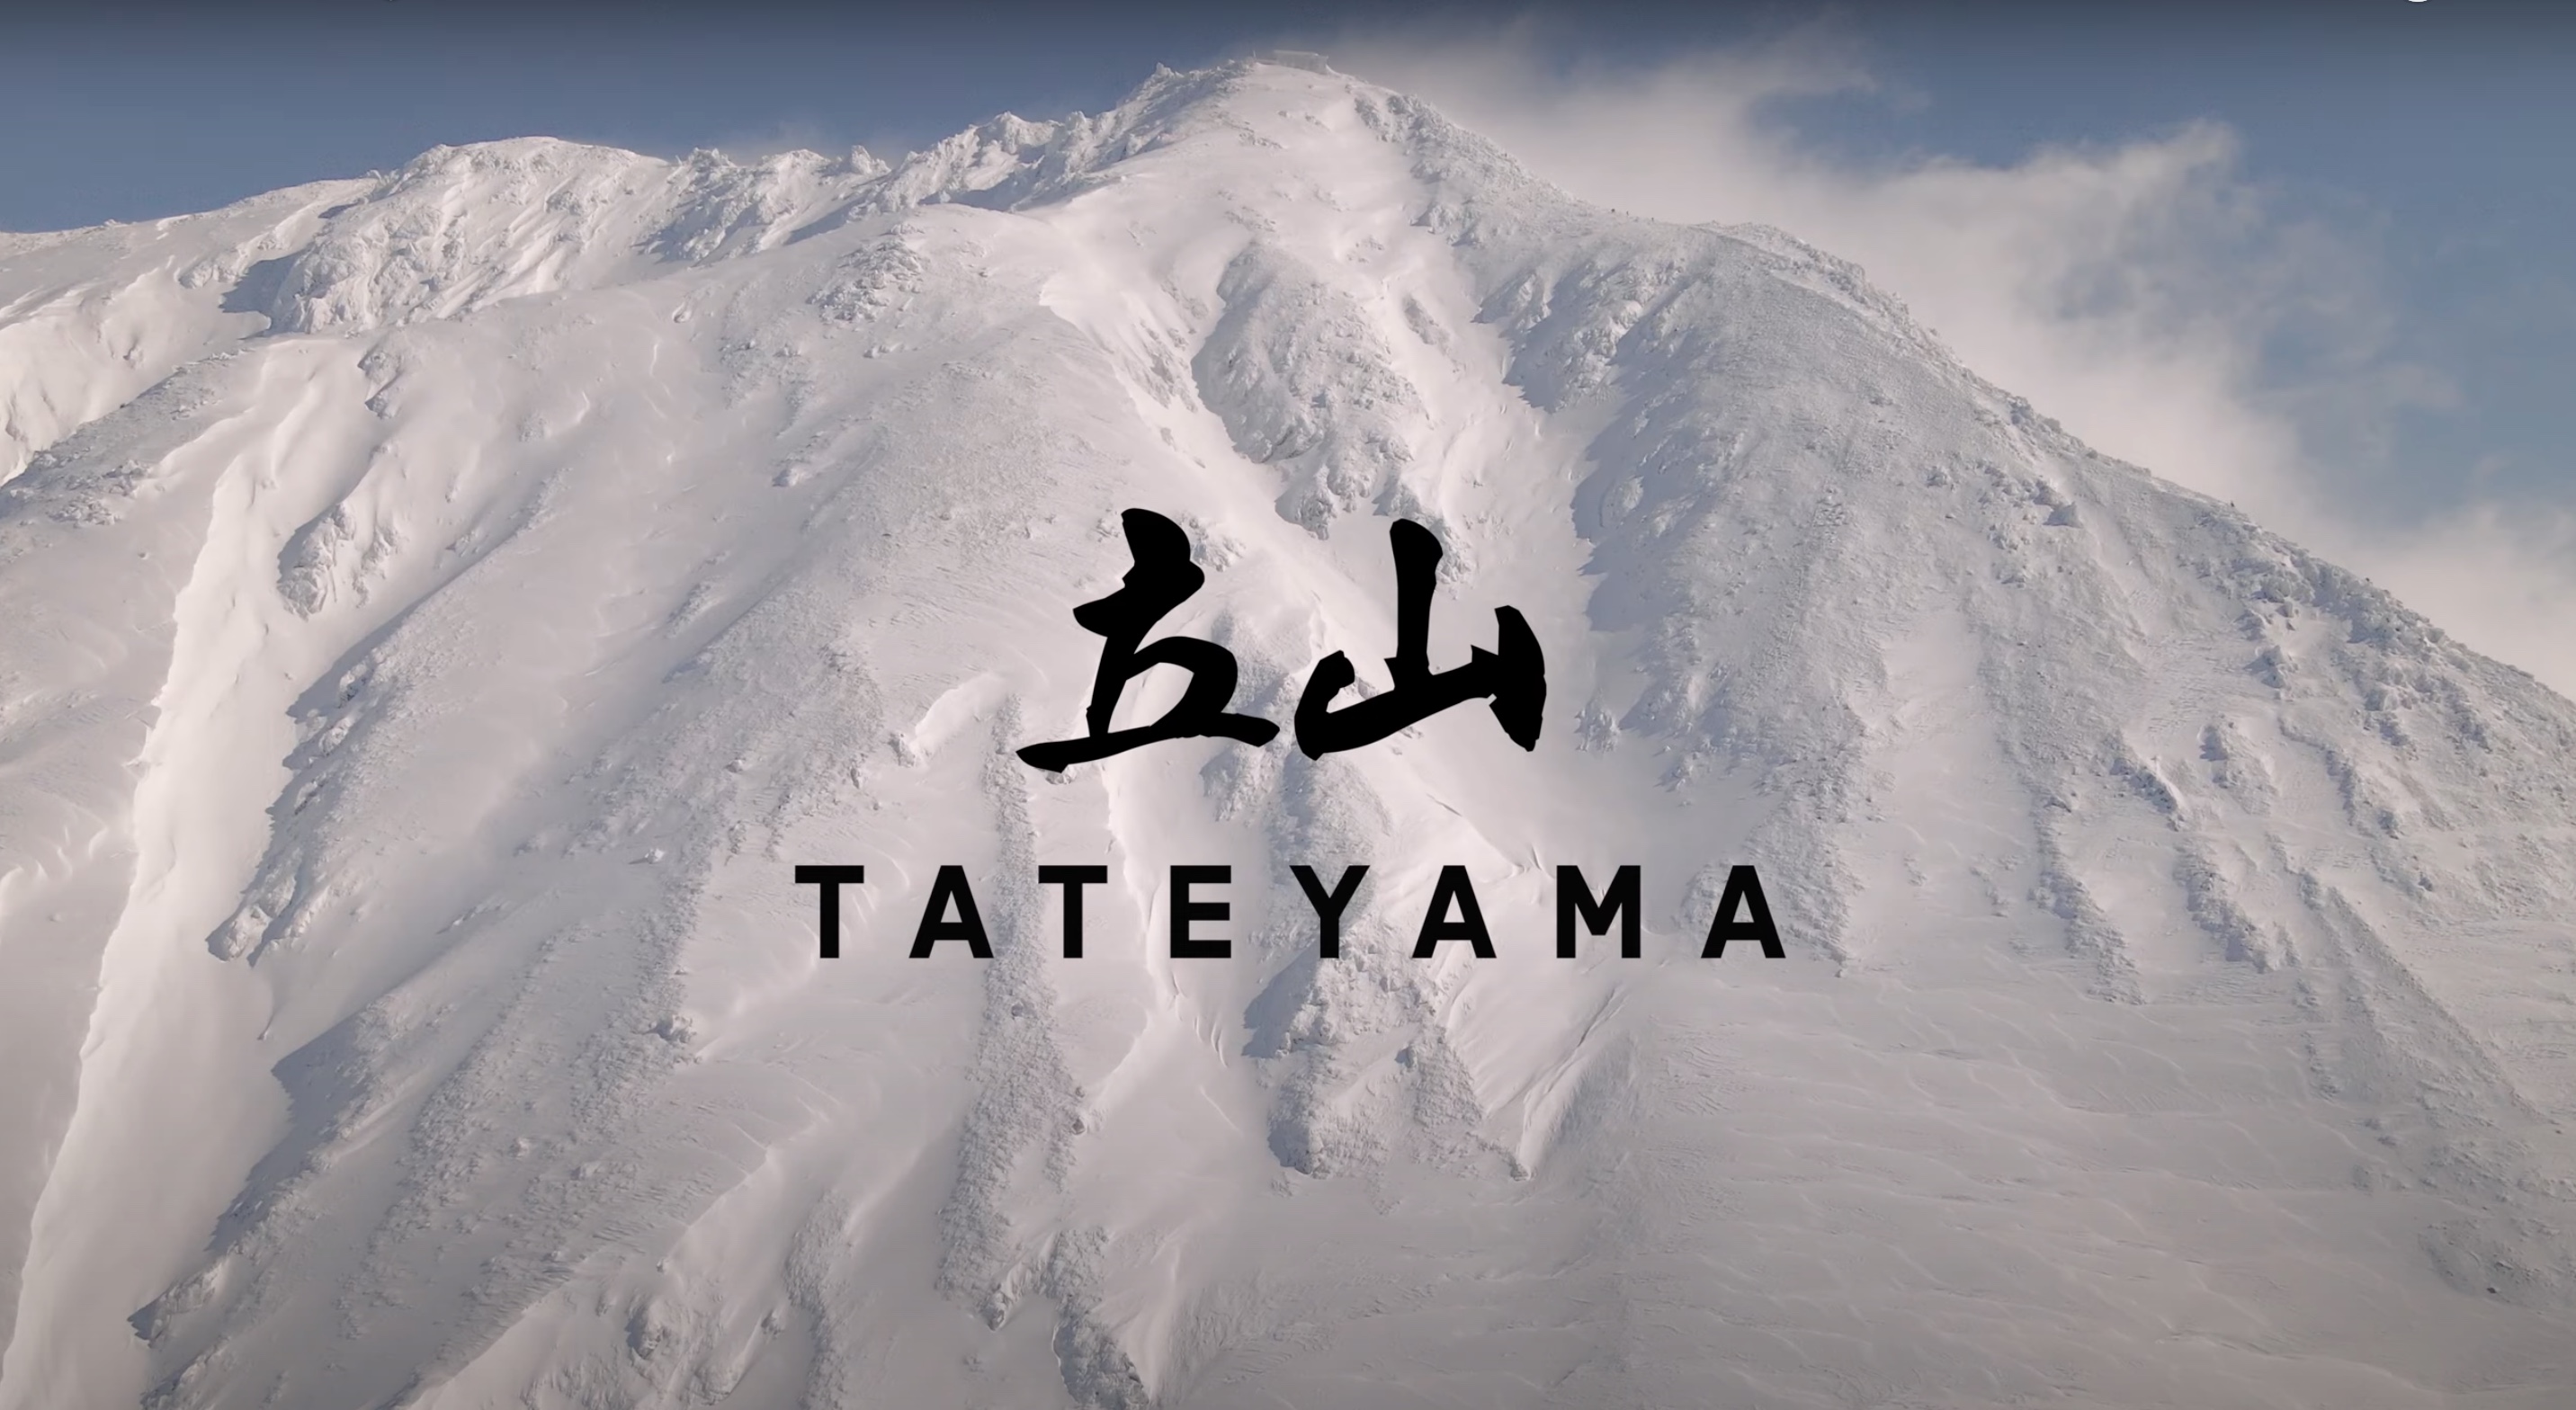 VIDEO:  Above Treeline Adventure Snowboarding In Japan